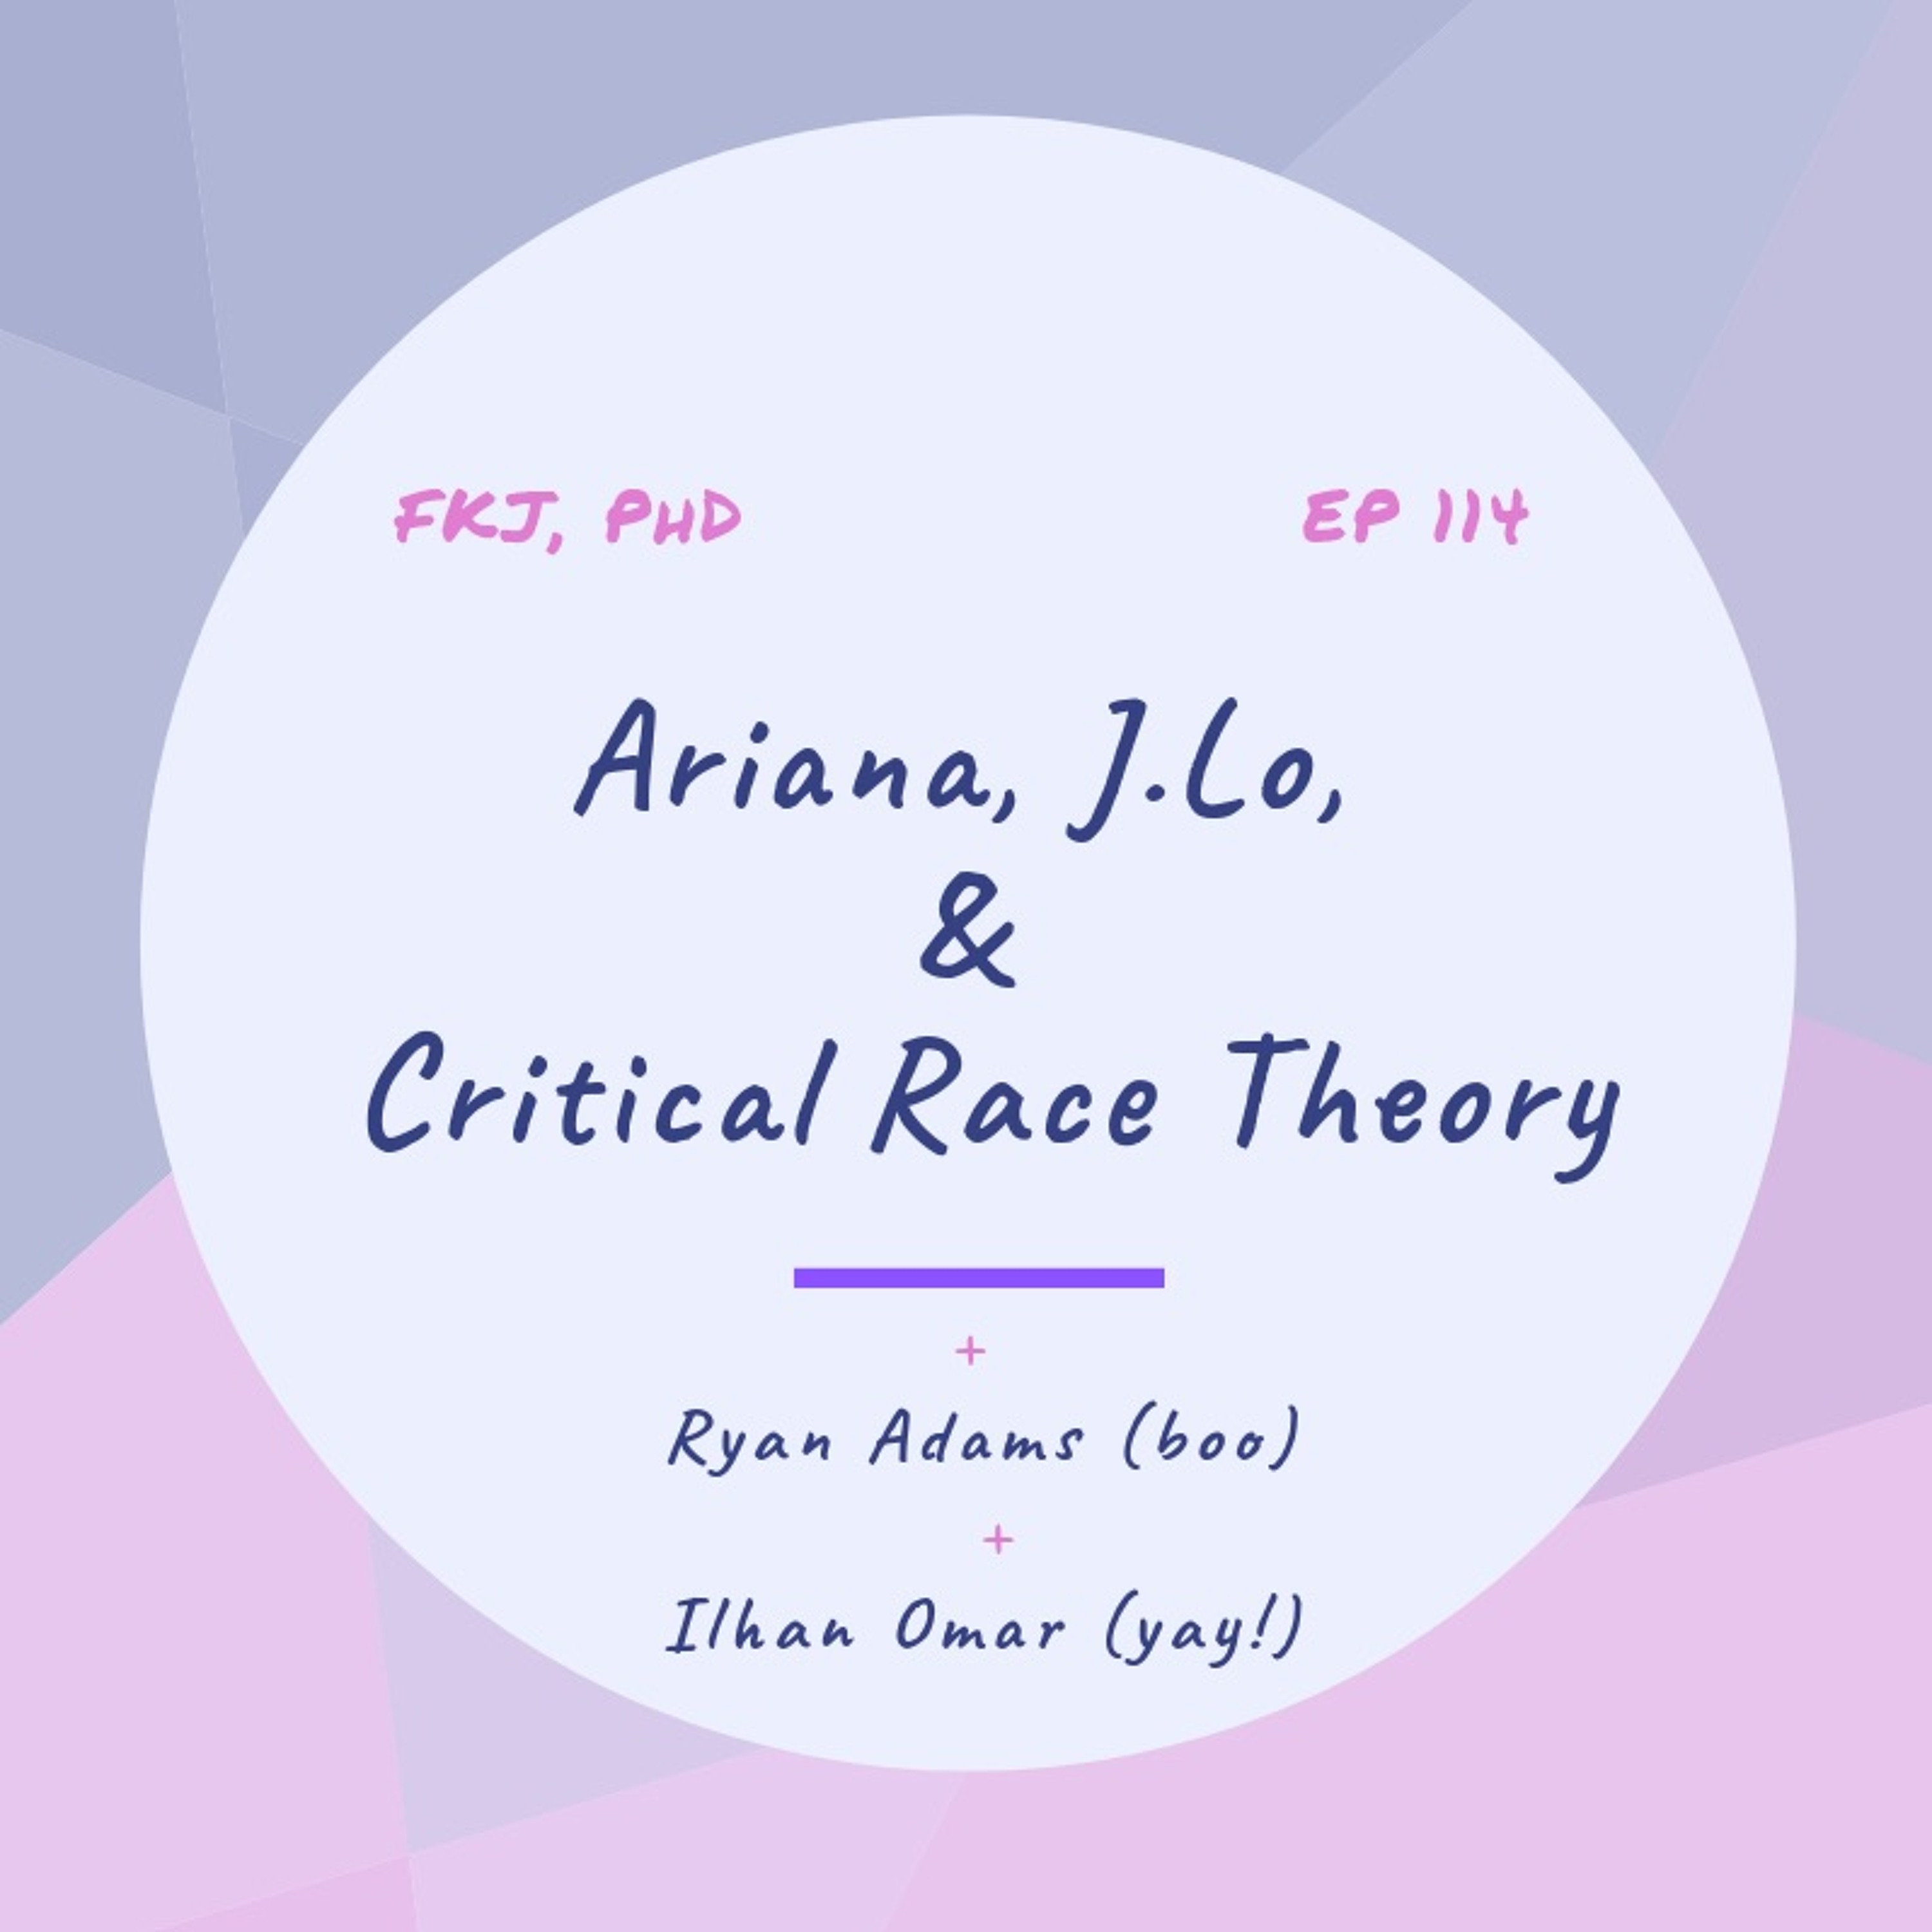 Ep 114: Ariana, J. Lo, & Critical Race Theory